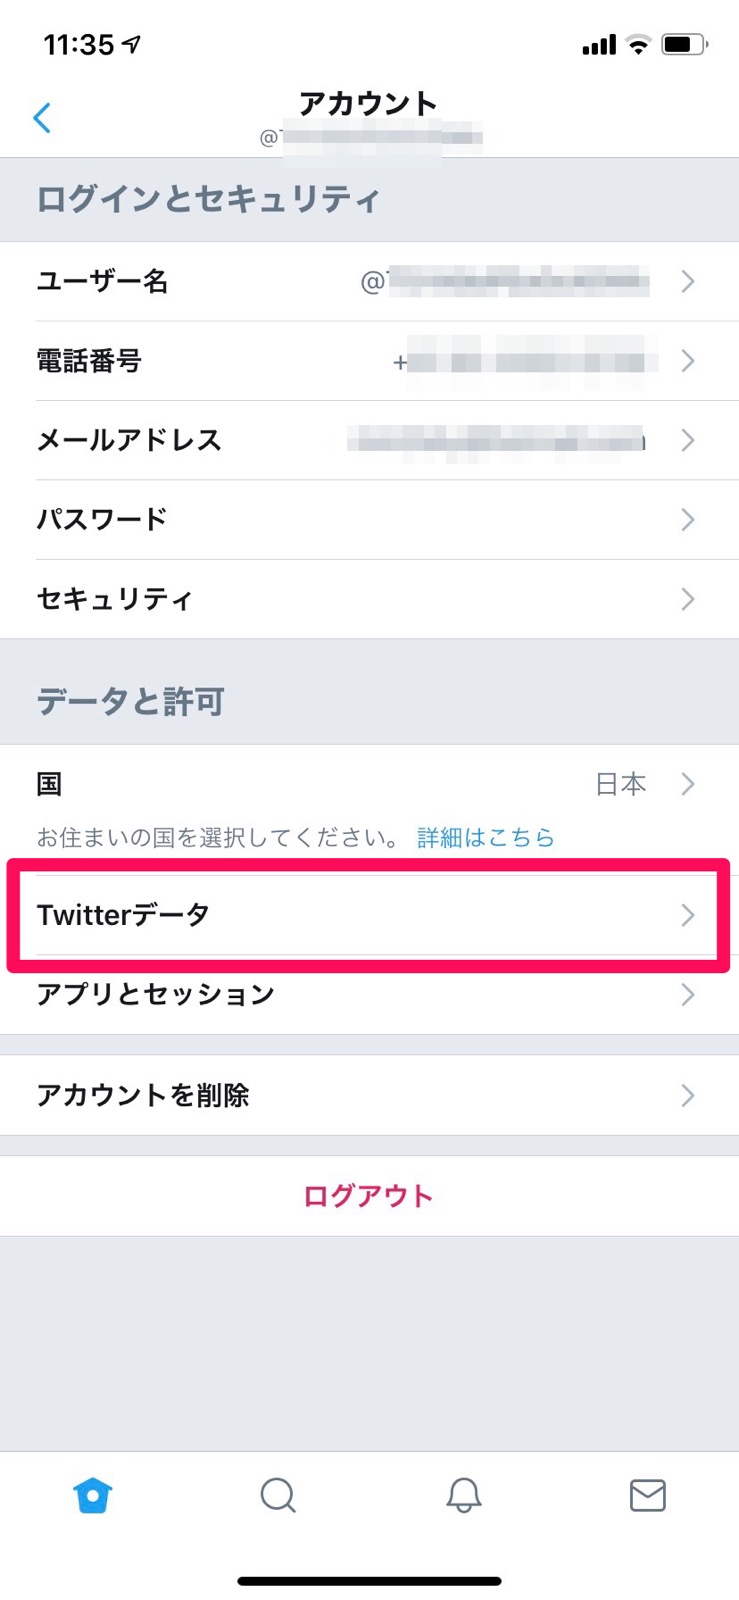 Twitterのアカウント名とは ユーザー名との違い 変更方法を解説 Apptopi